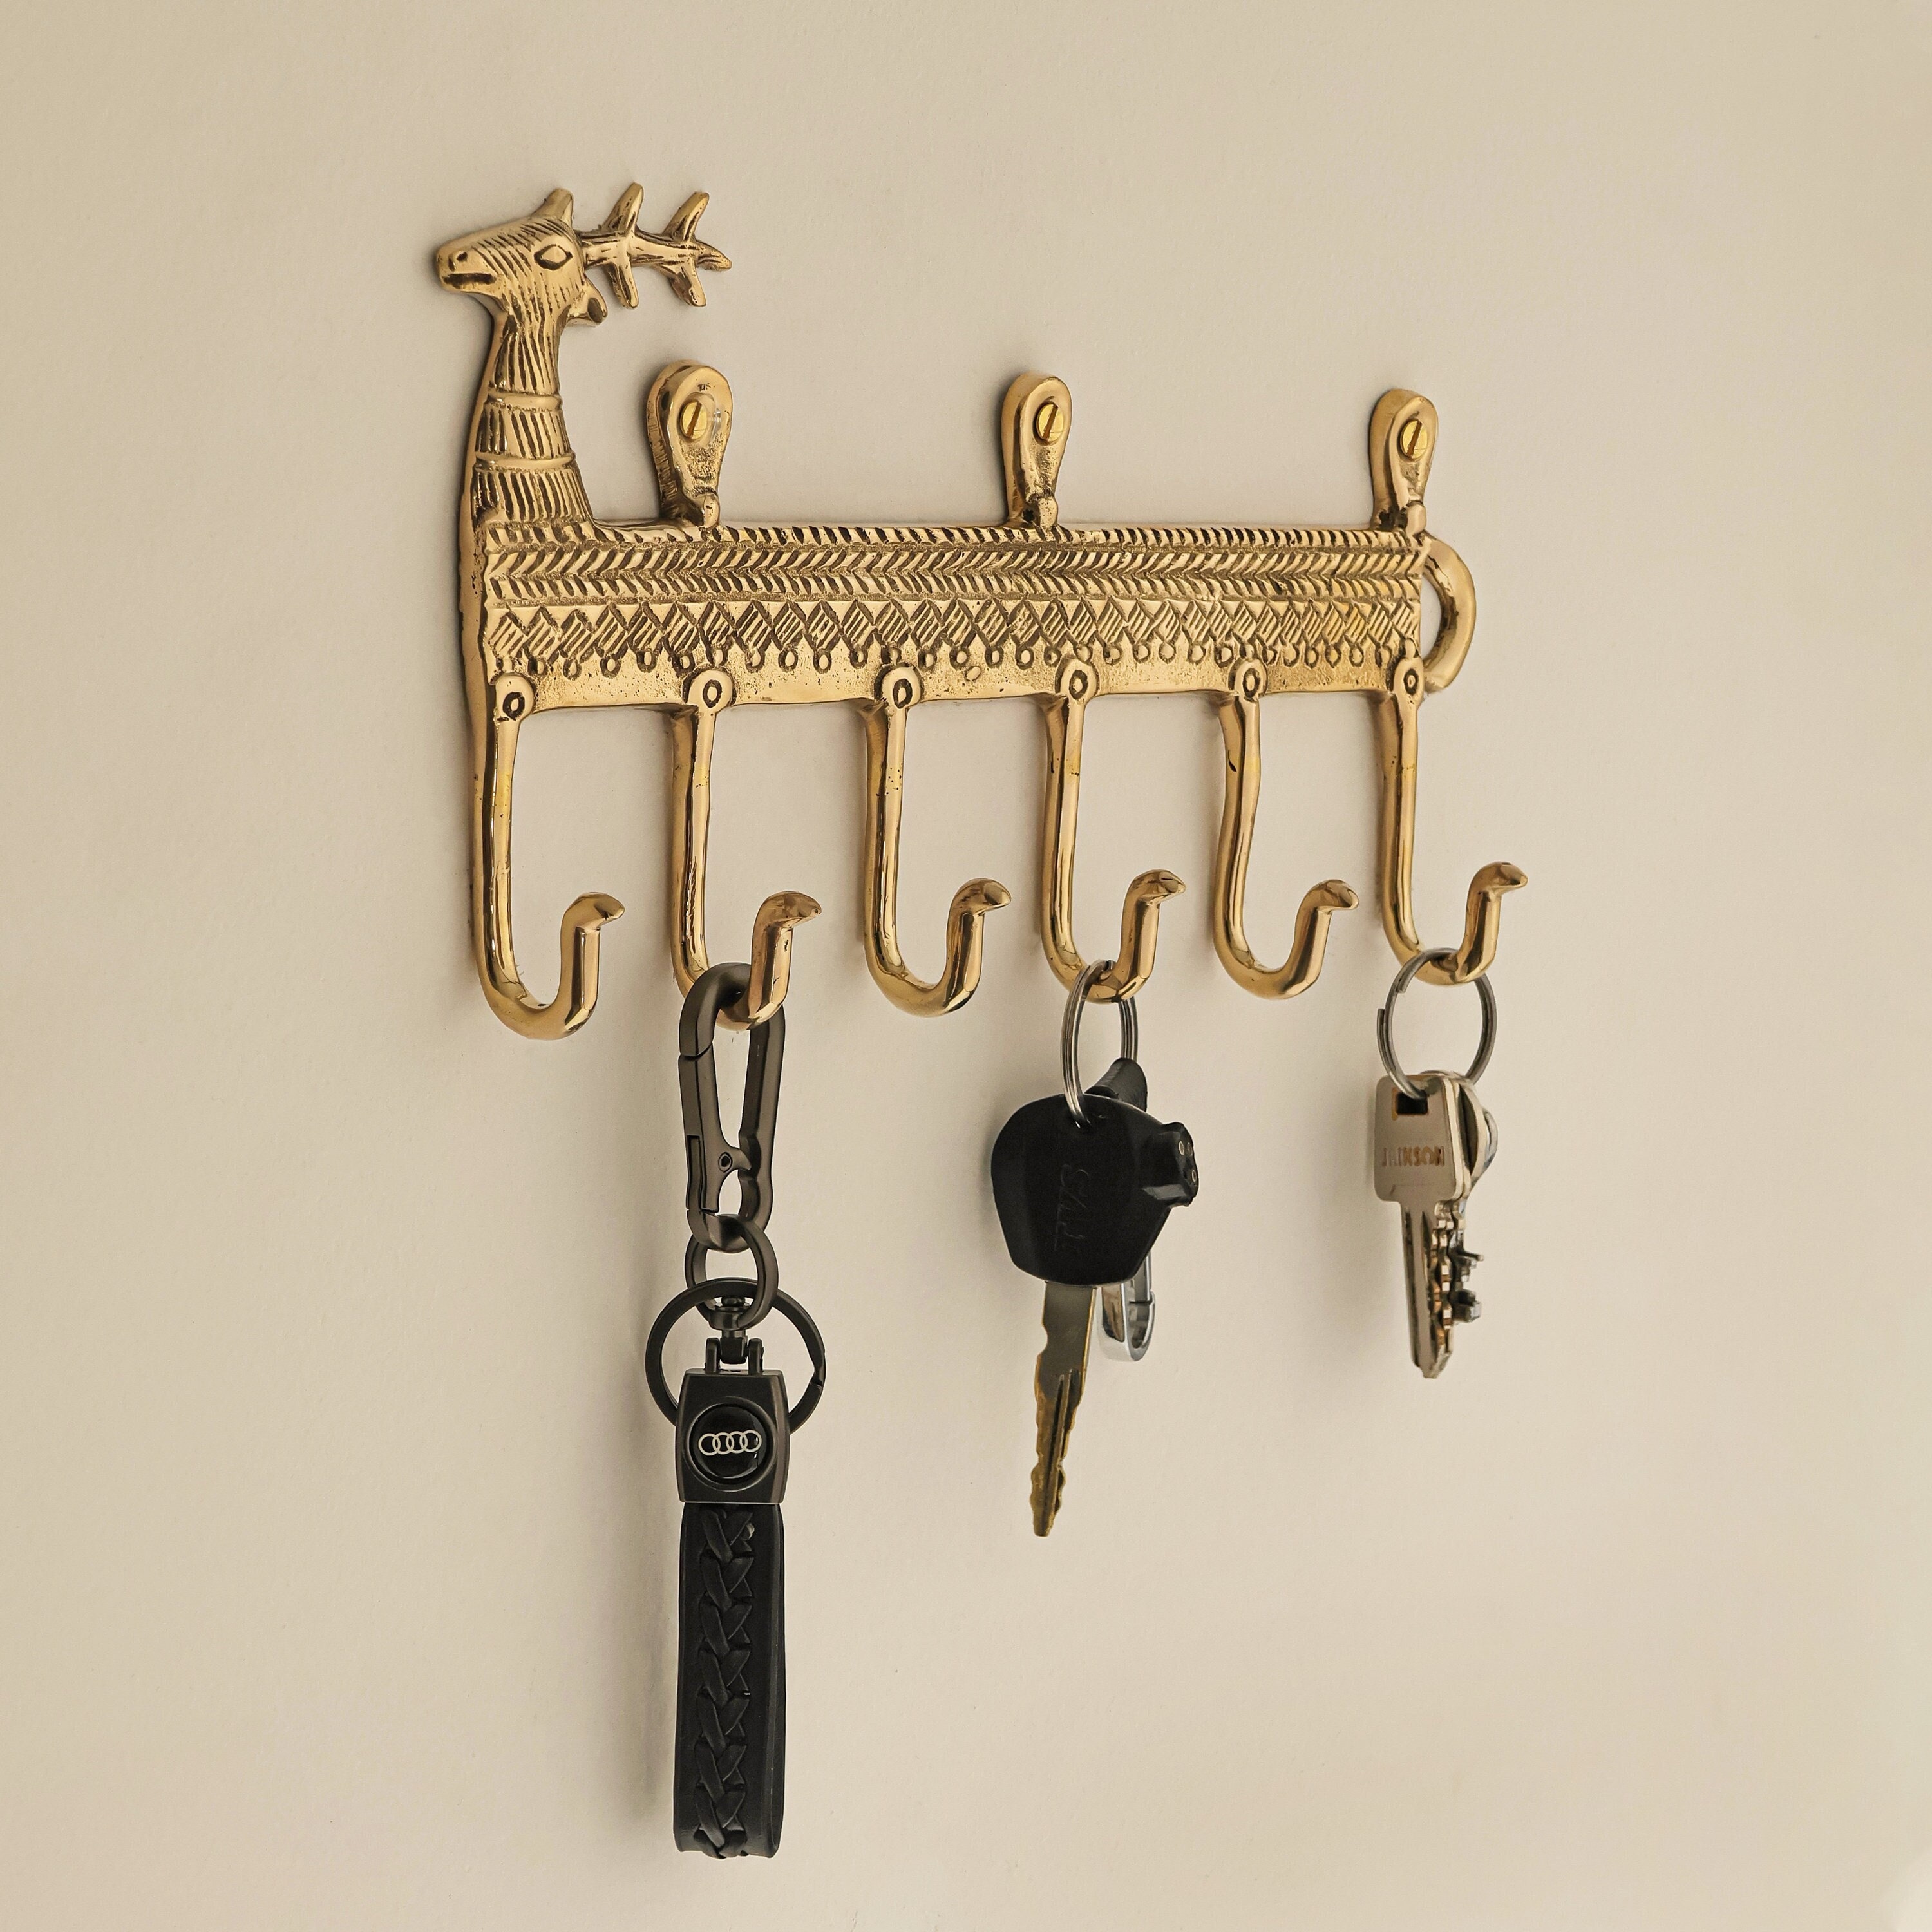 Deer Decorative Wall Hook Metal Wall Hooks / Antique Brass Curtain Tie  Backs Hardware Hanger Coat Rack Hangers Unique -  Israel